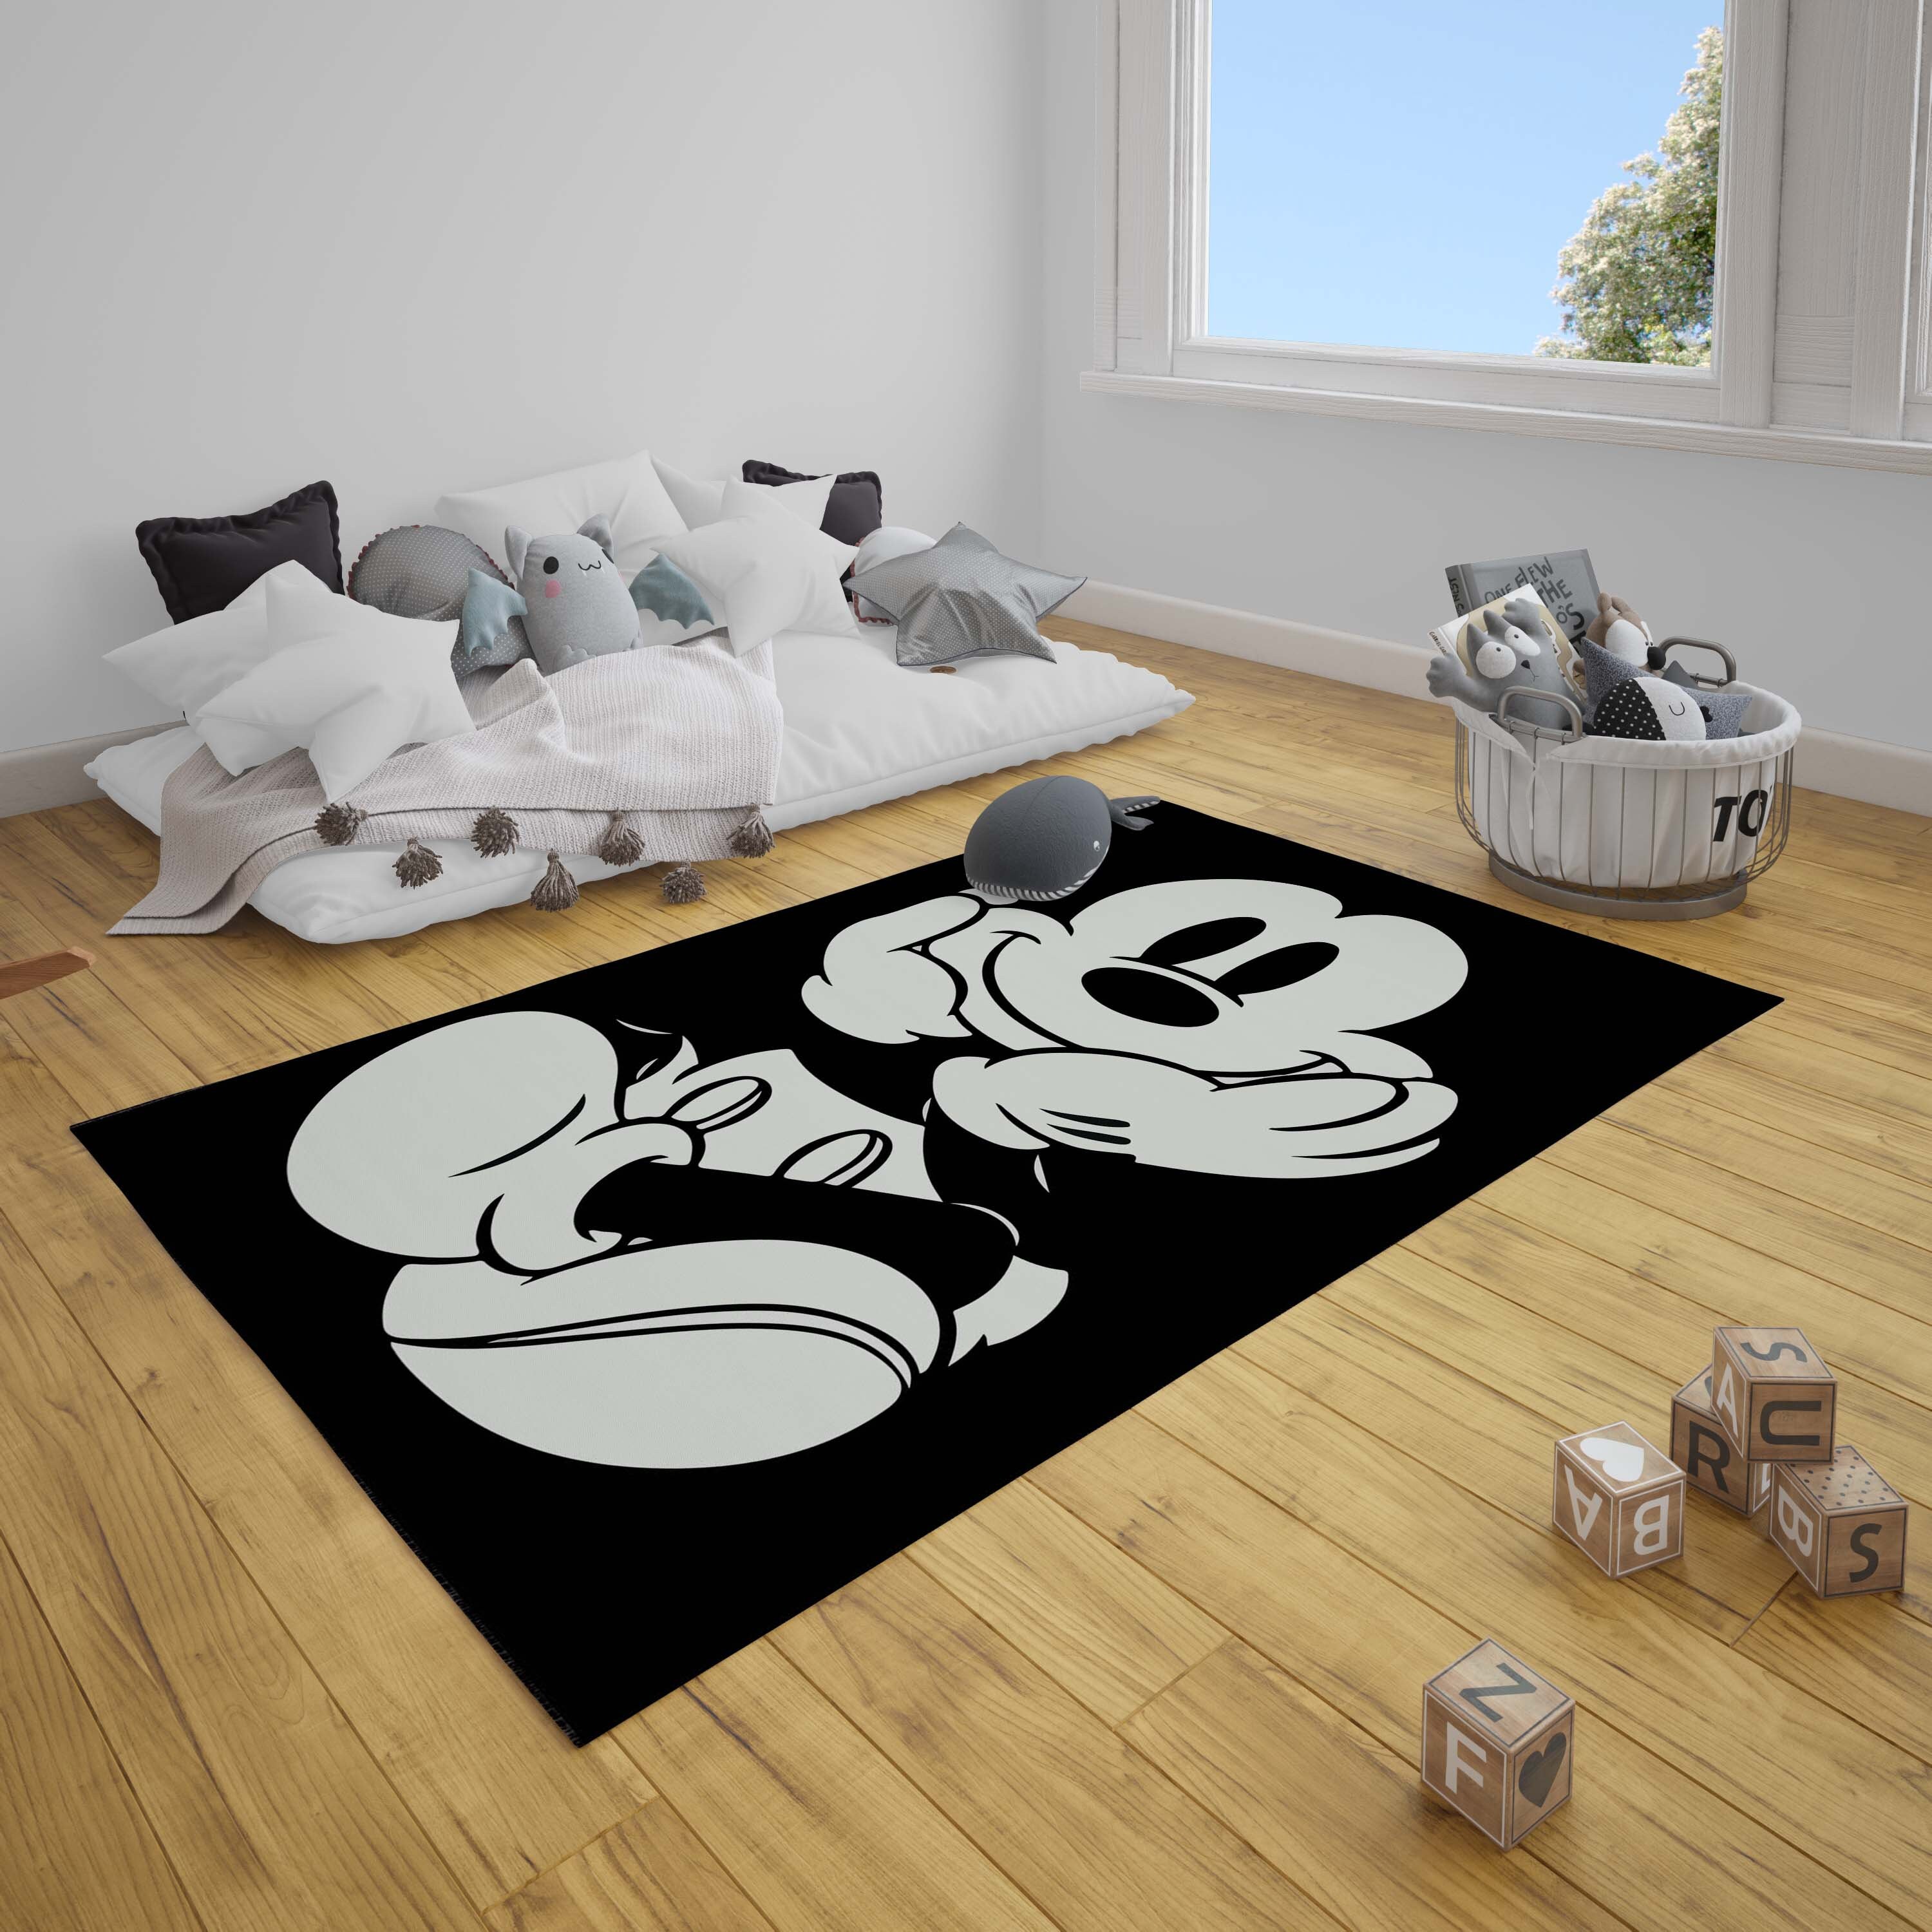 Mickey Mouse Supreme Area Rug Bedroom Floor Decor